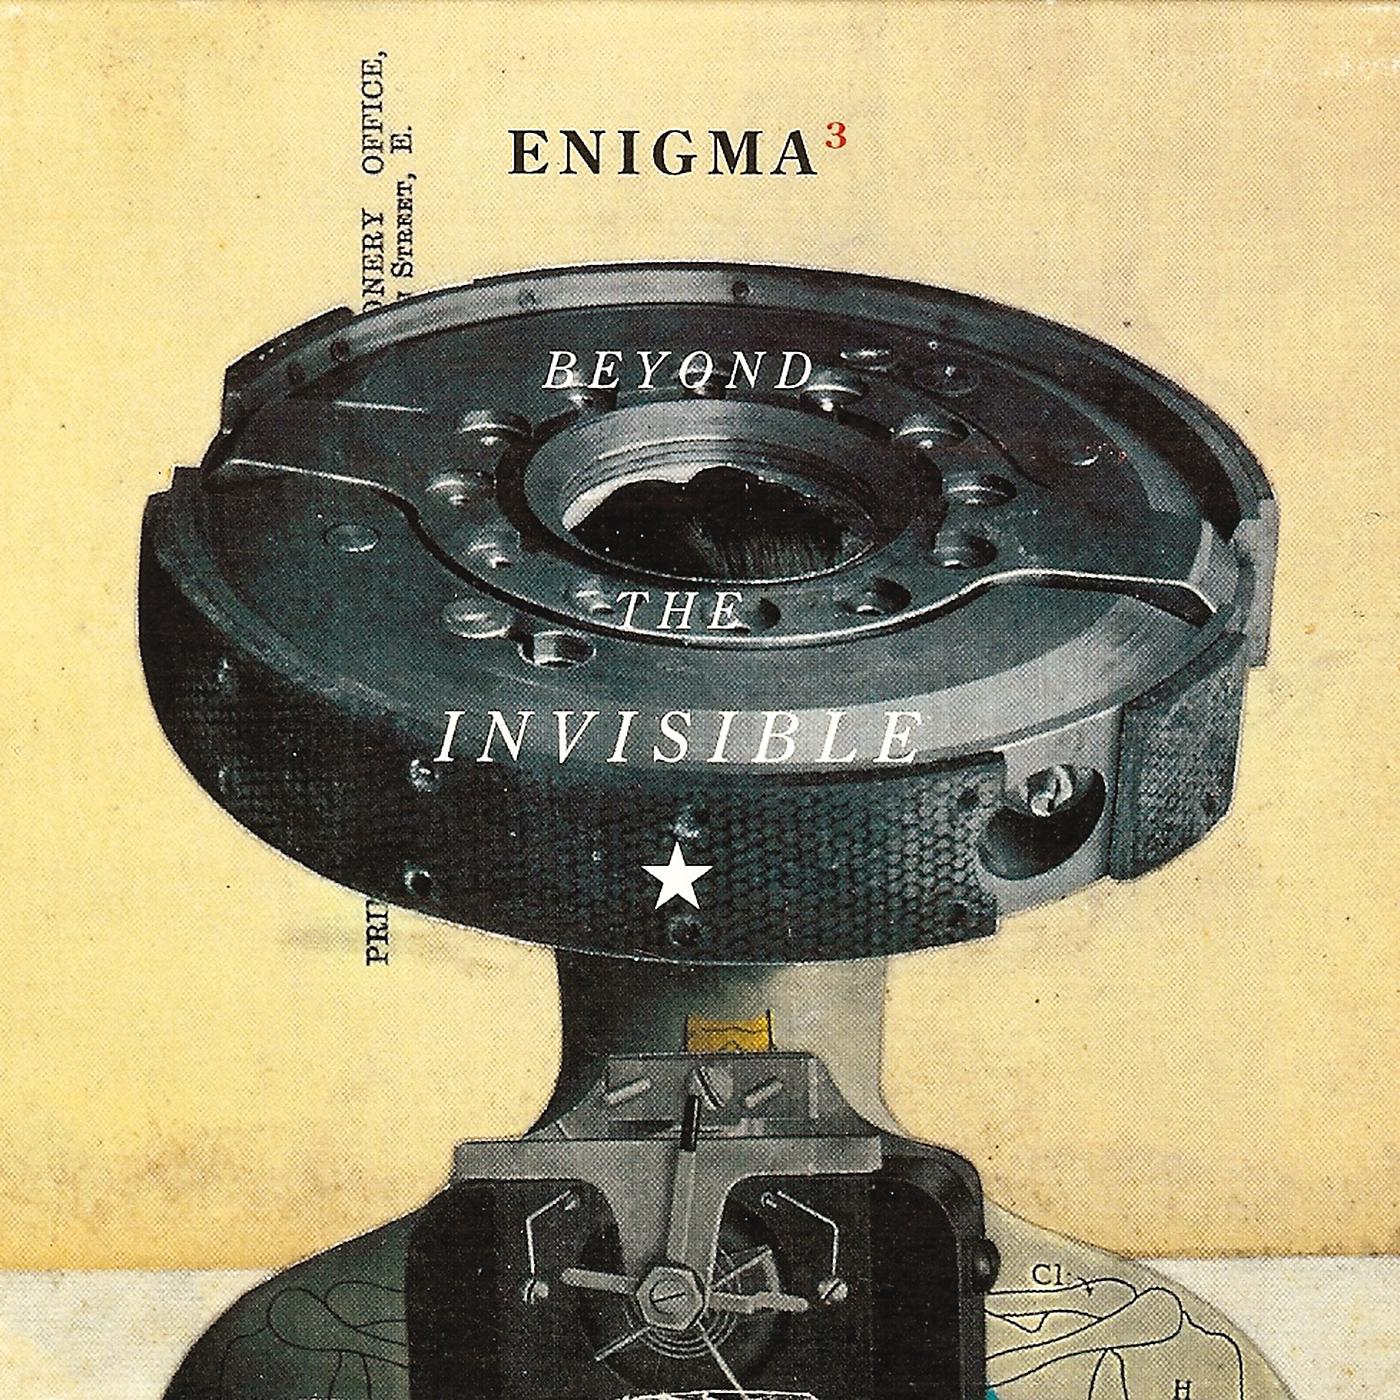 Roi est mort. Enigma 1996. Enigma - Beyond the Invisible (1996). Enigma 1990. Enigma Beyond the Invisible альбом.